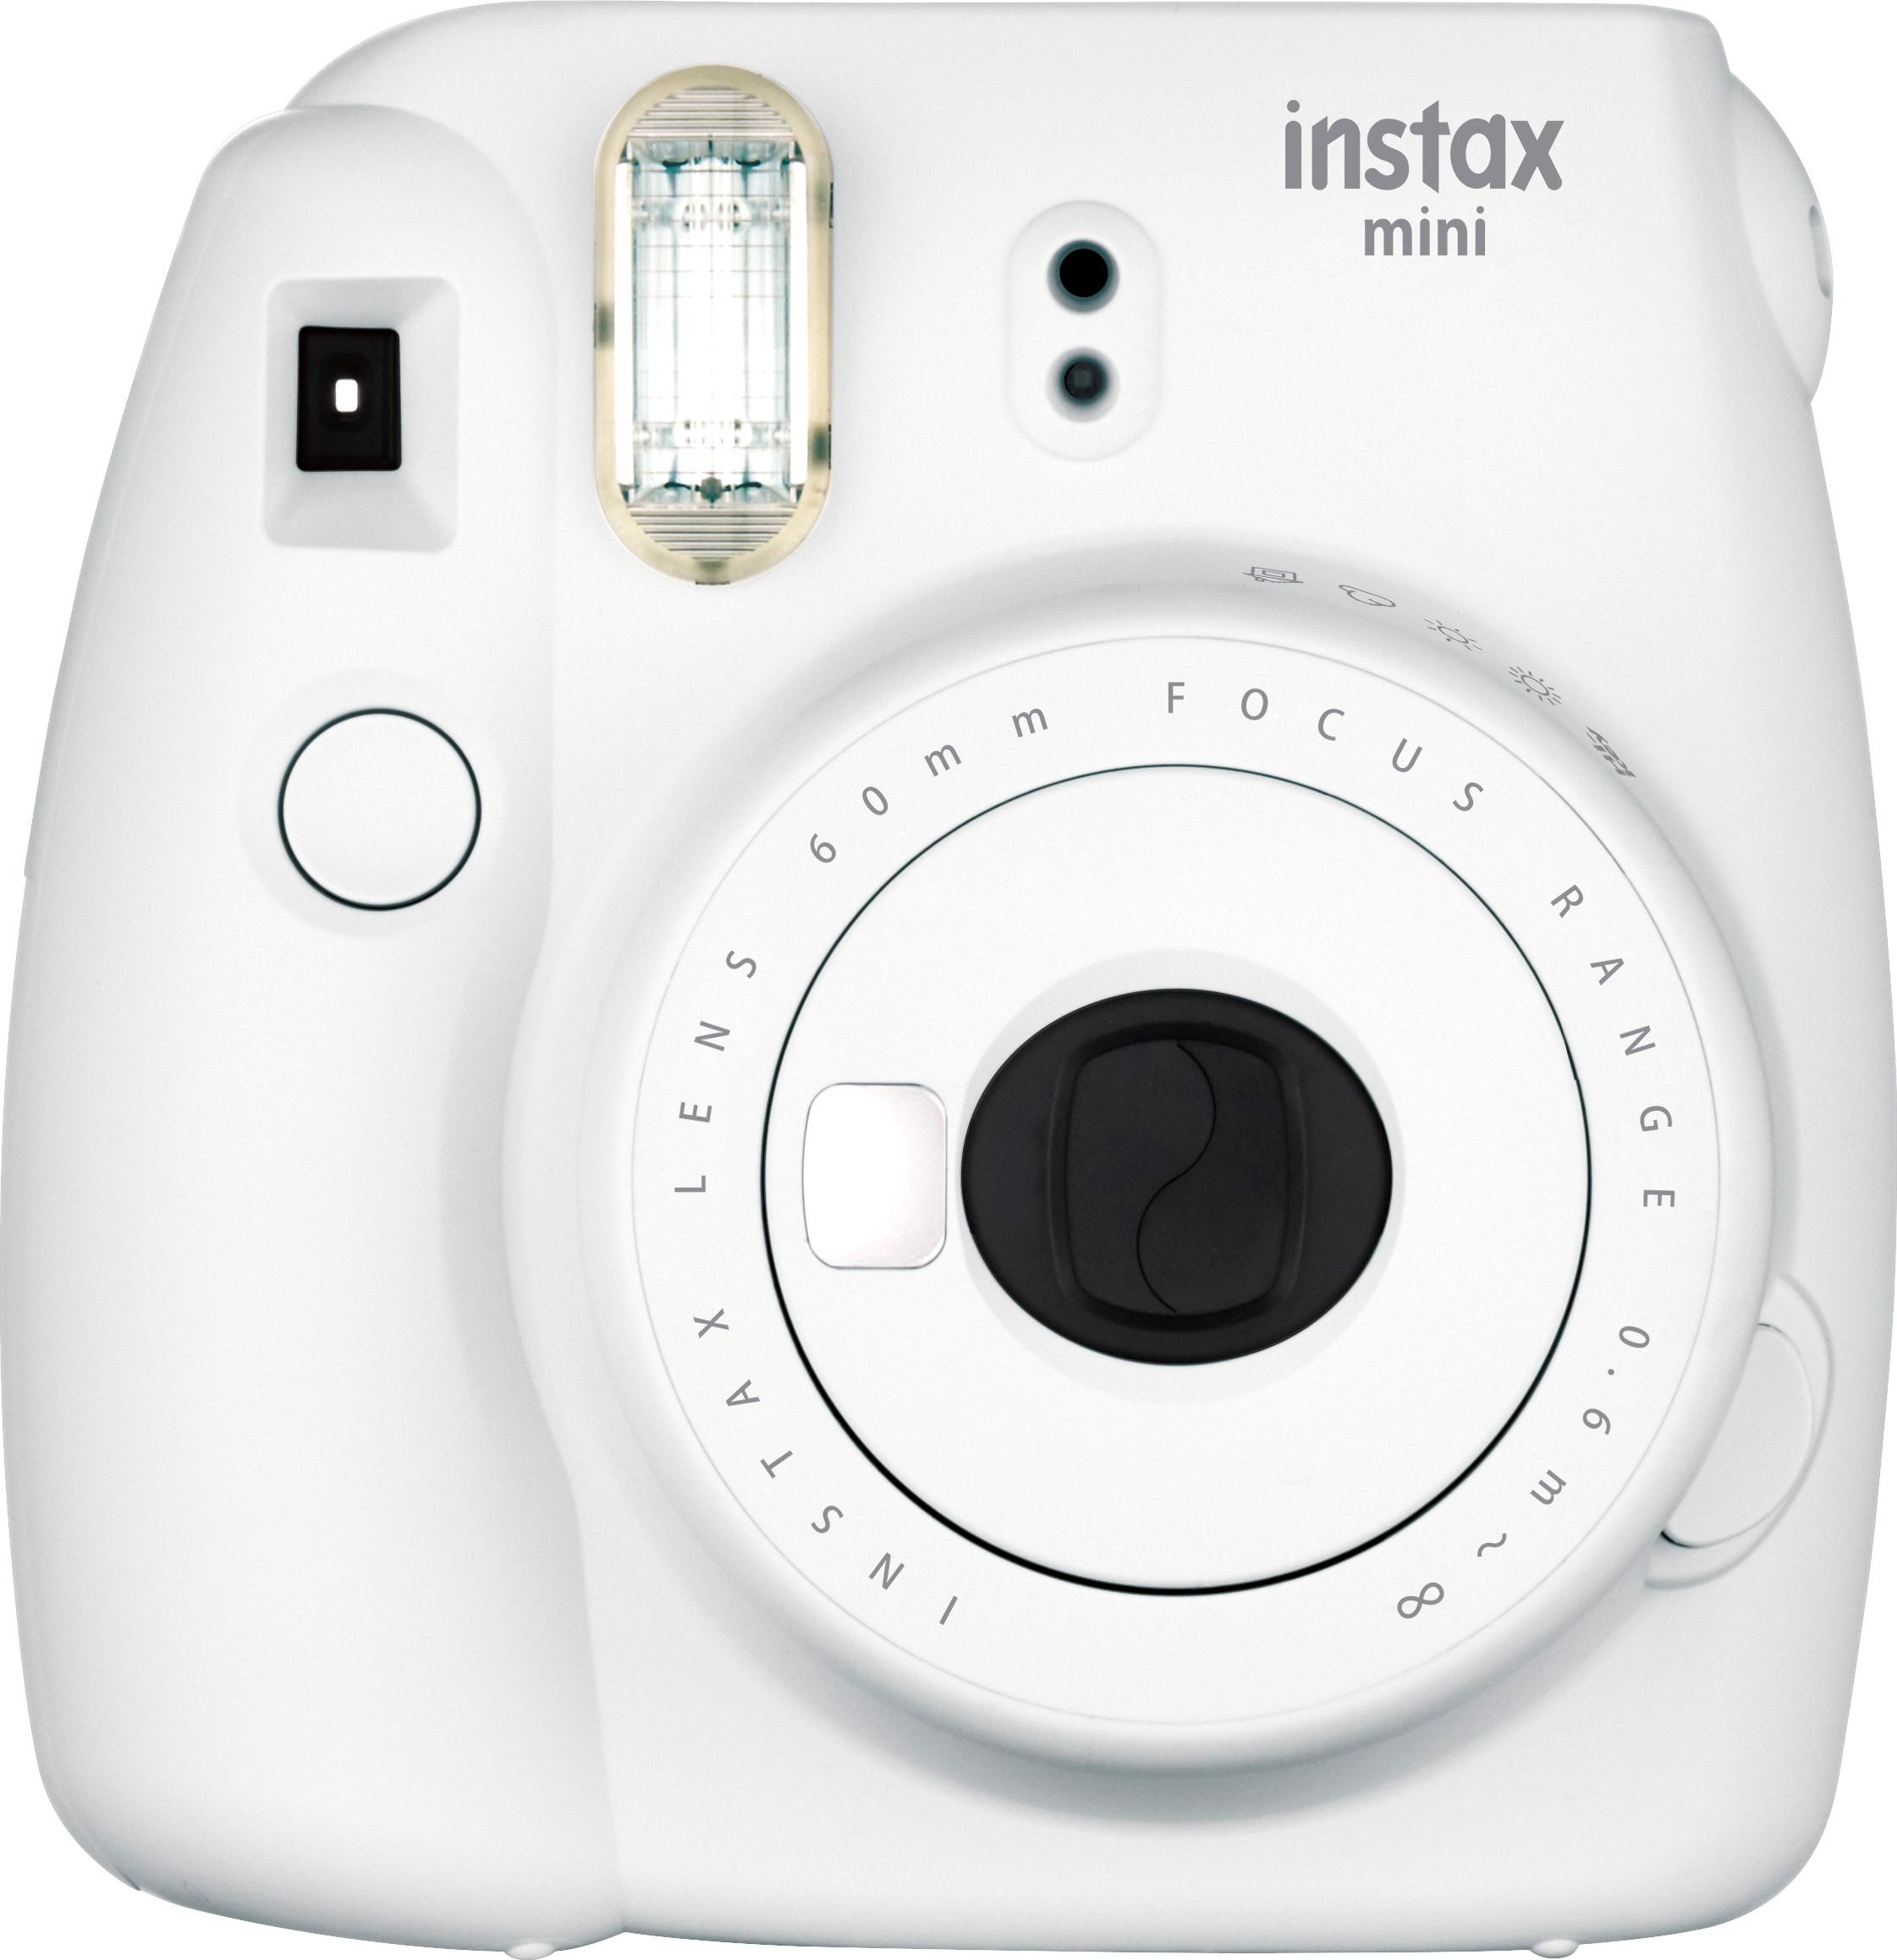 Fujifilm instax mini 9 Instant Film Camera White 16550629 - Best Buy